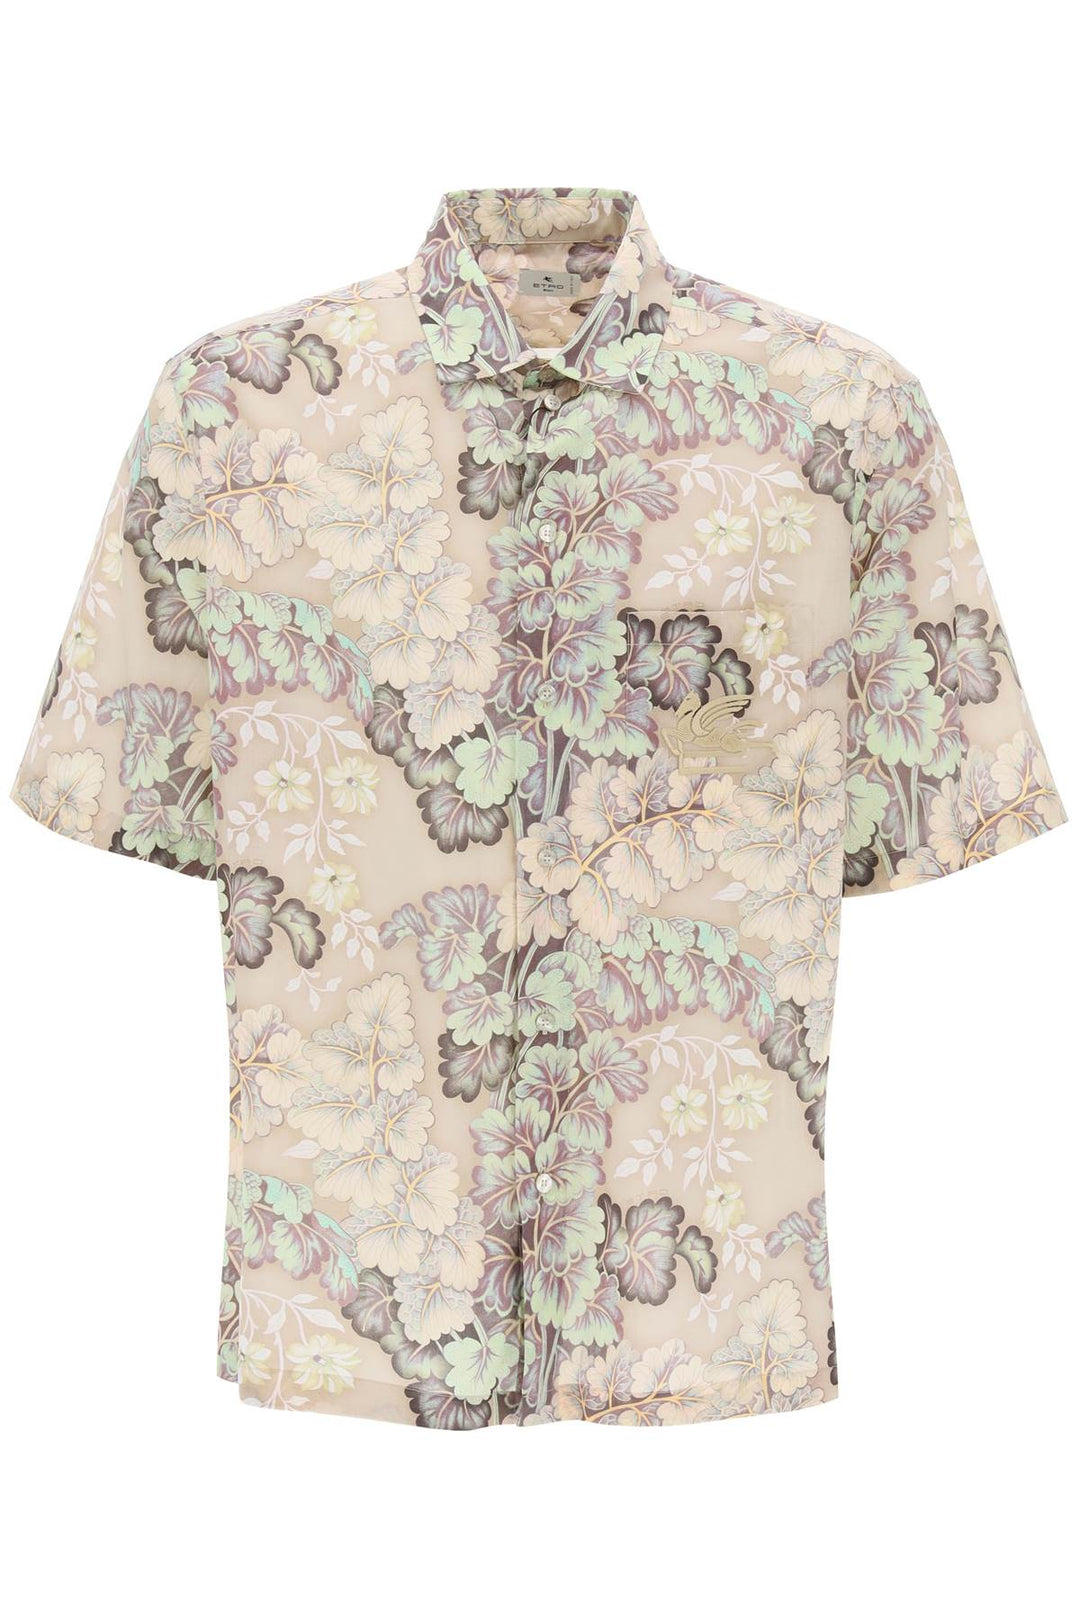 Etro Short Sleeved Floral Shirt   Neutro